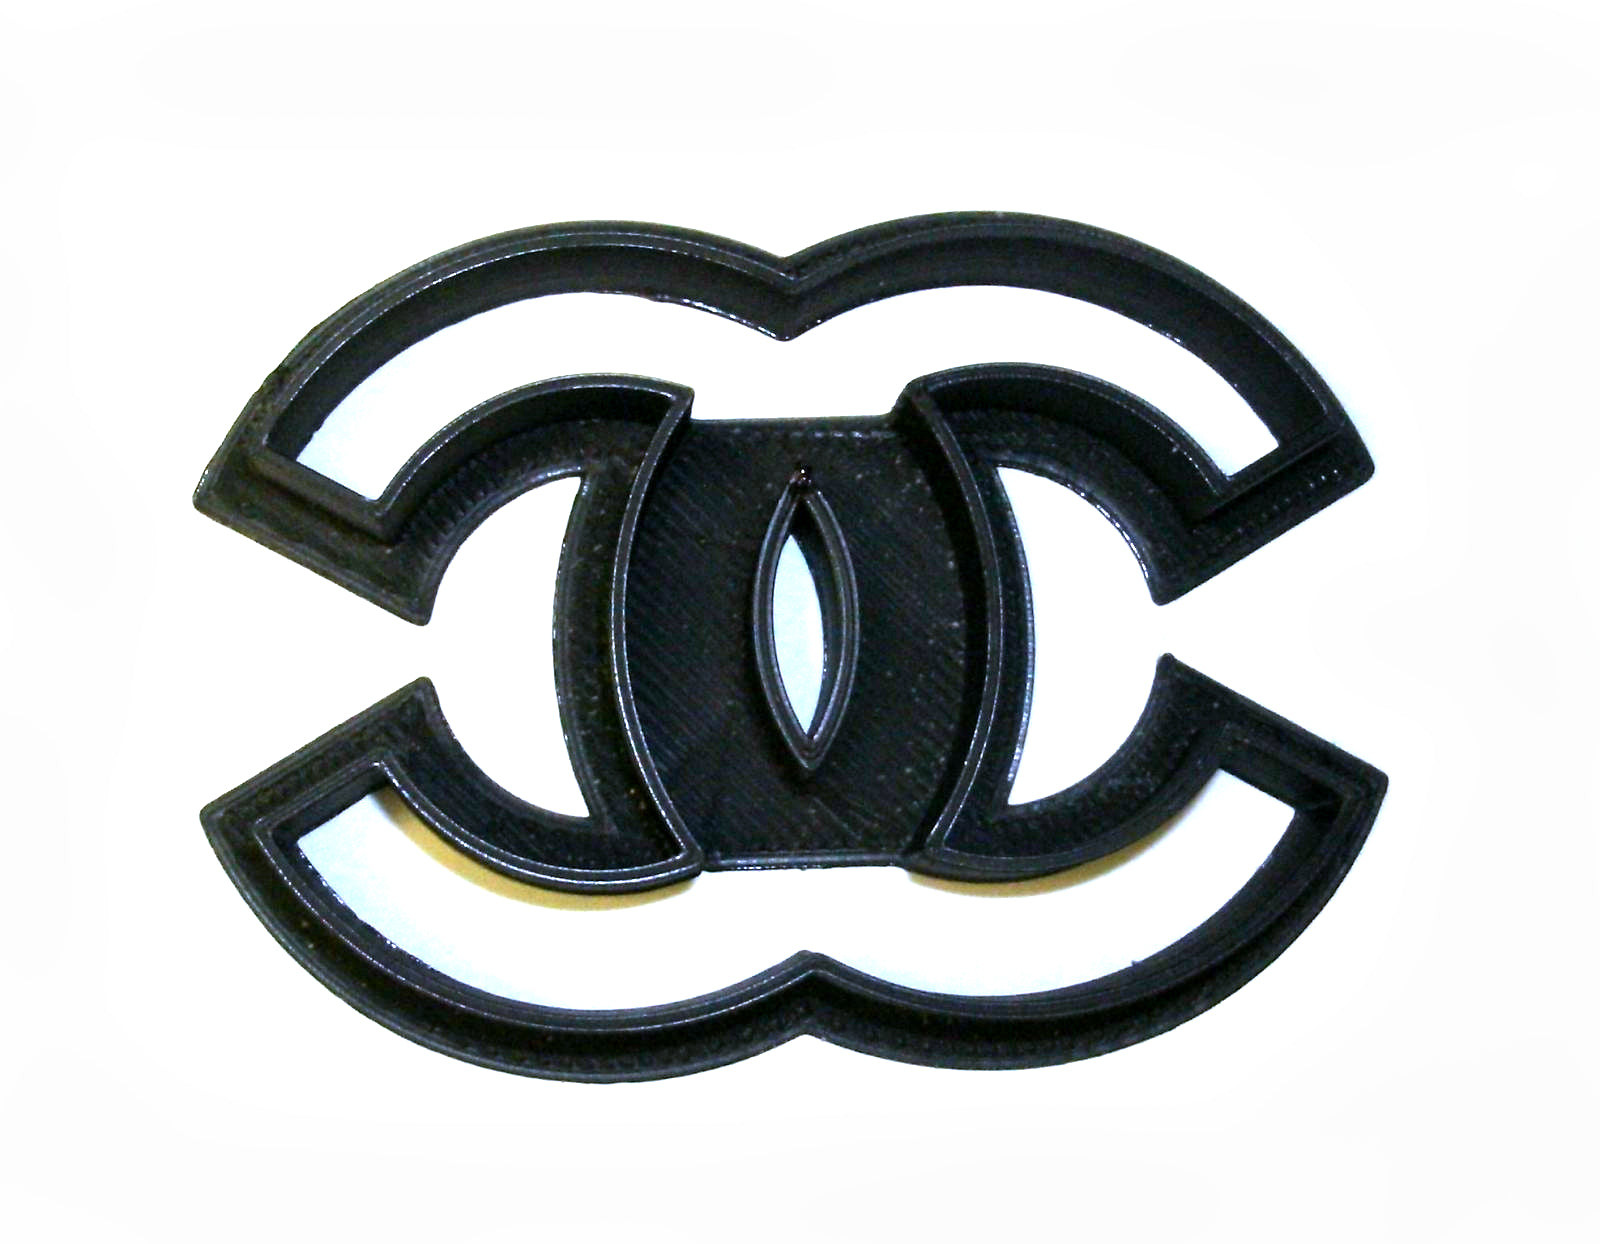 chanel logo patch